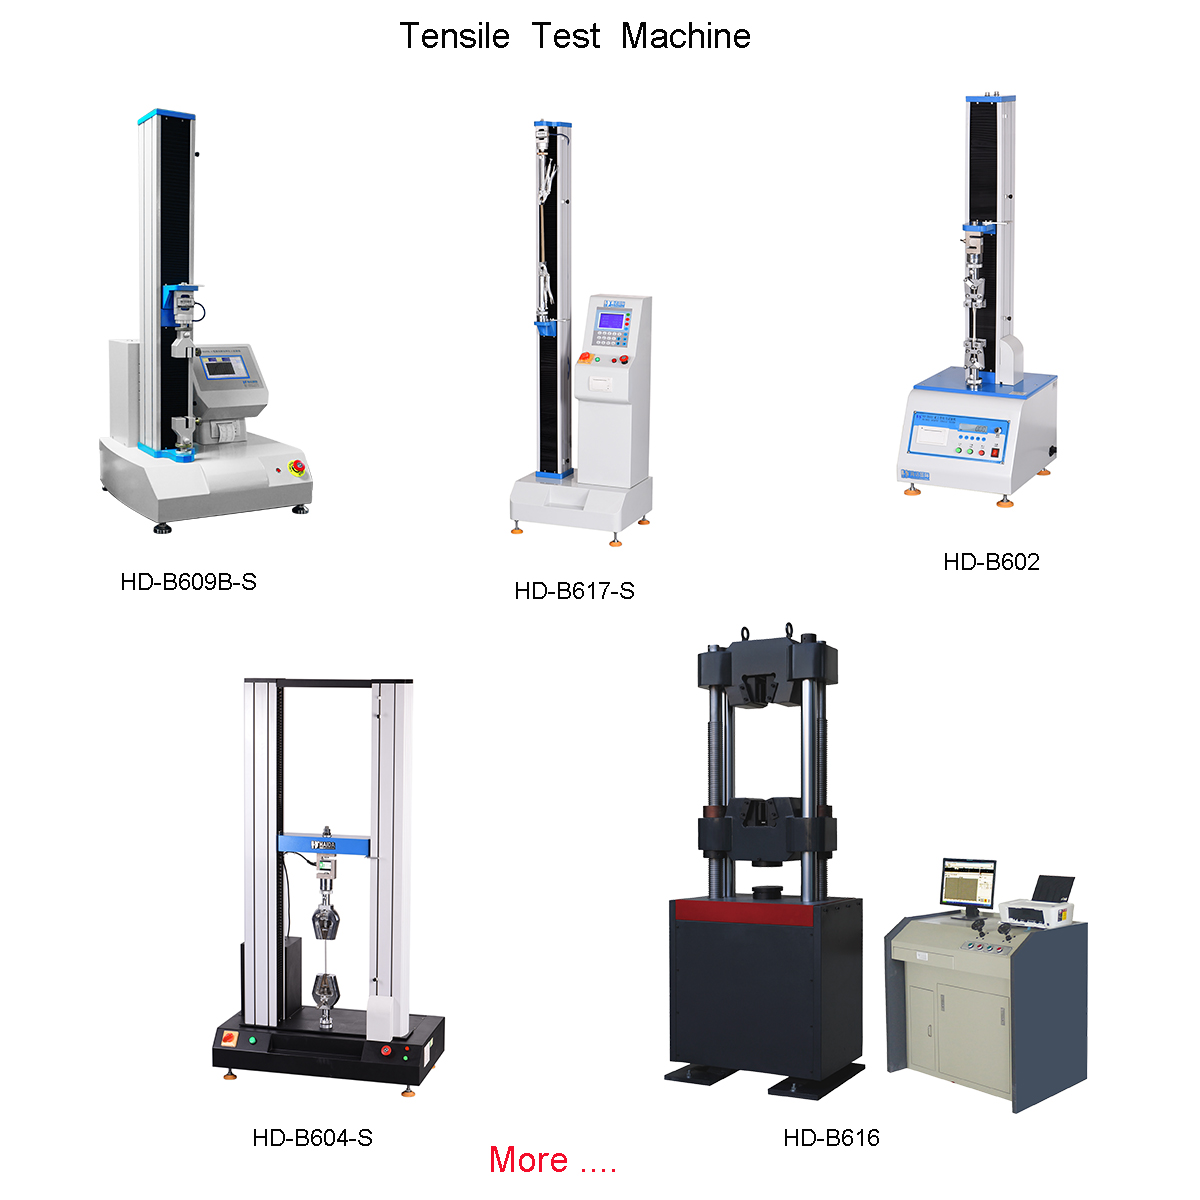 The extensiveness of the tensile testing machine for metallic or nonmetallic testing